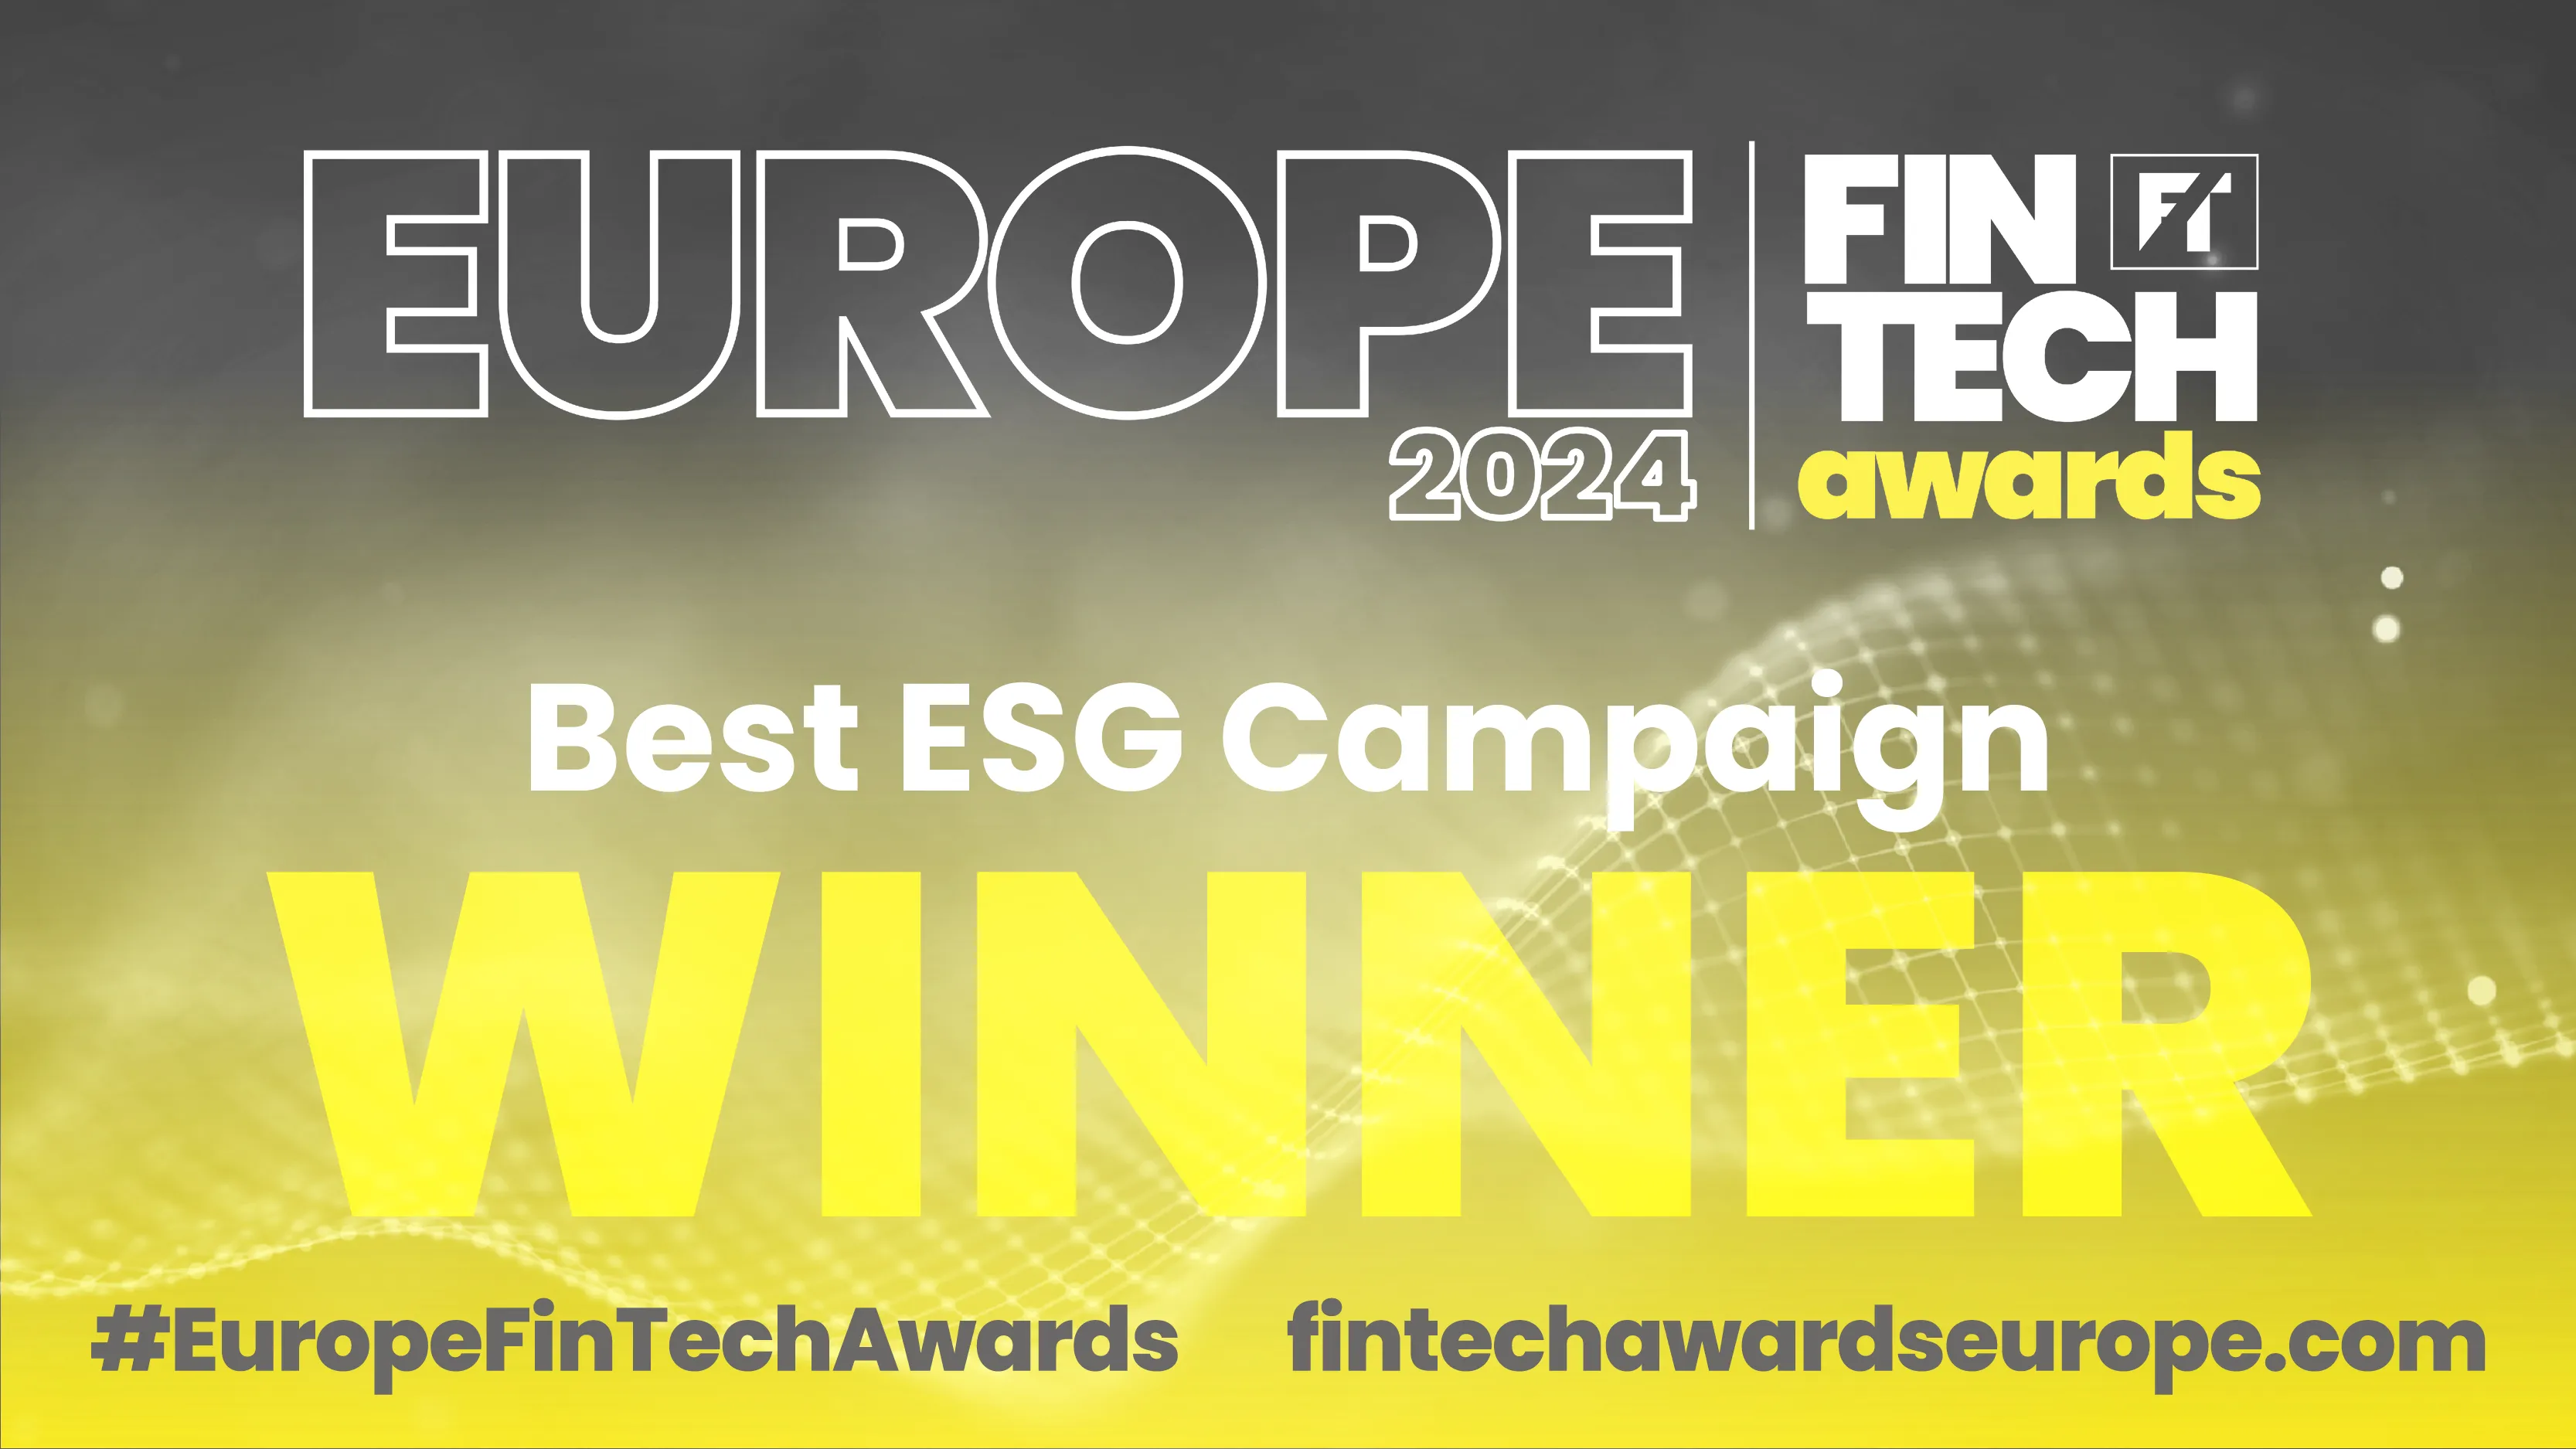 Best ESG Campaign 2024 - European Fintech awards